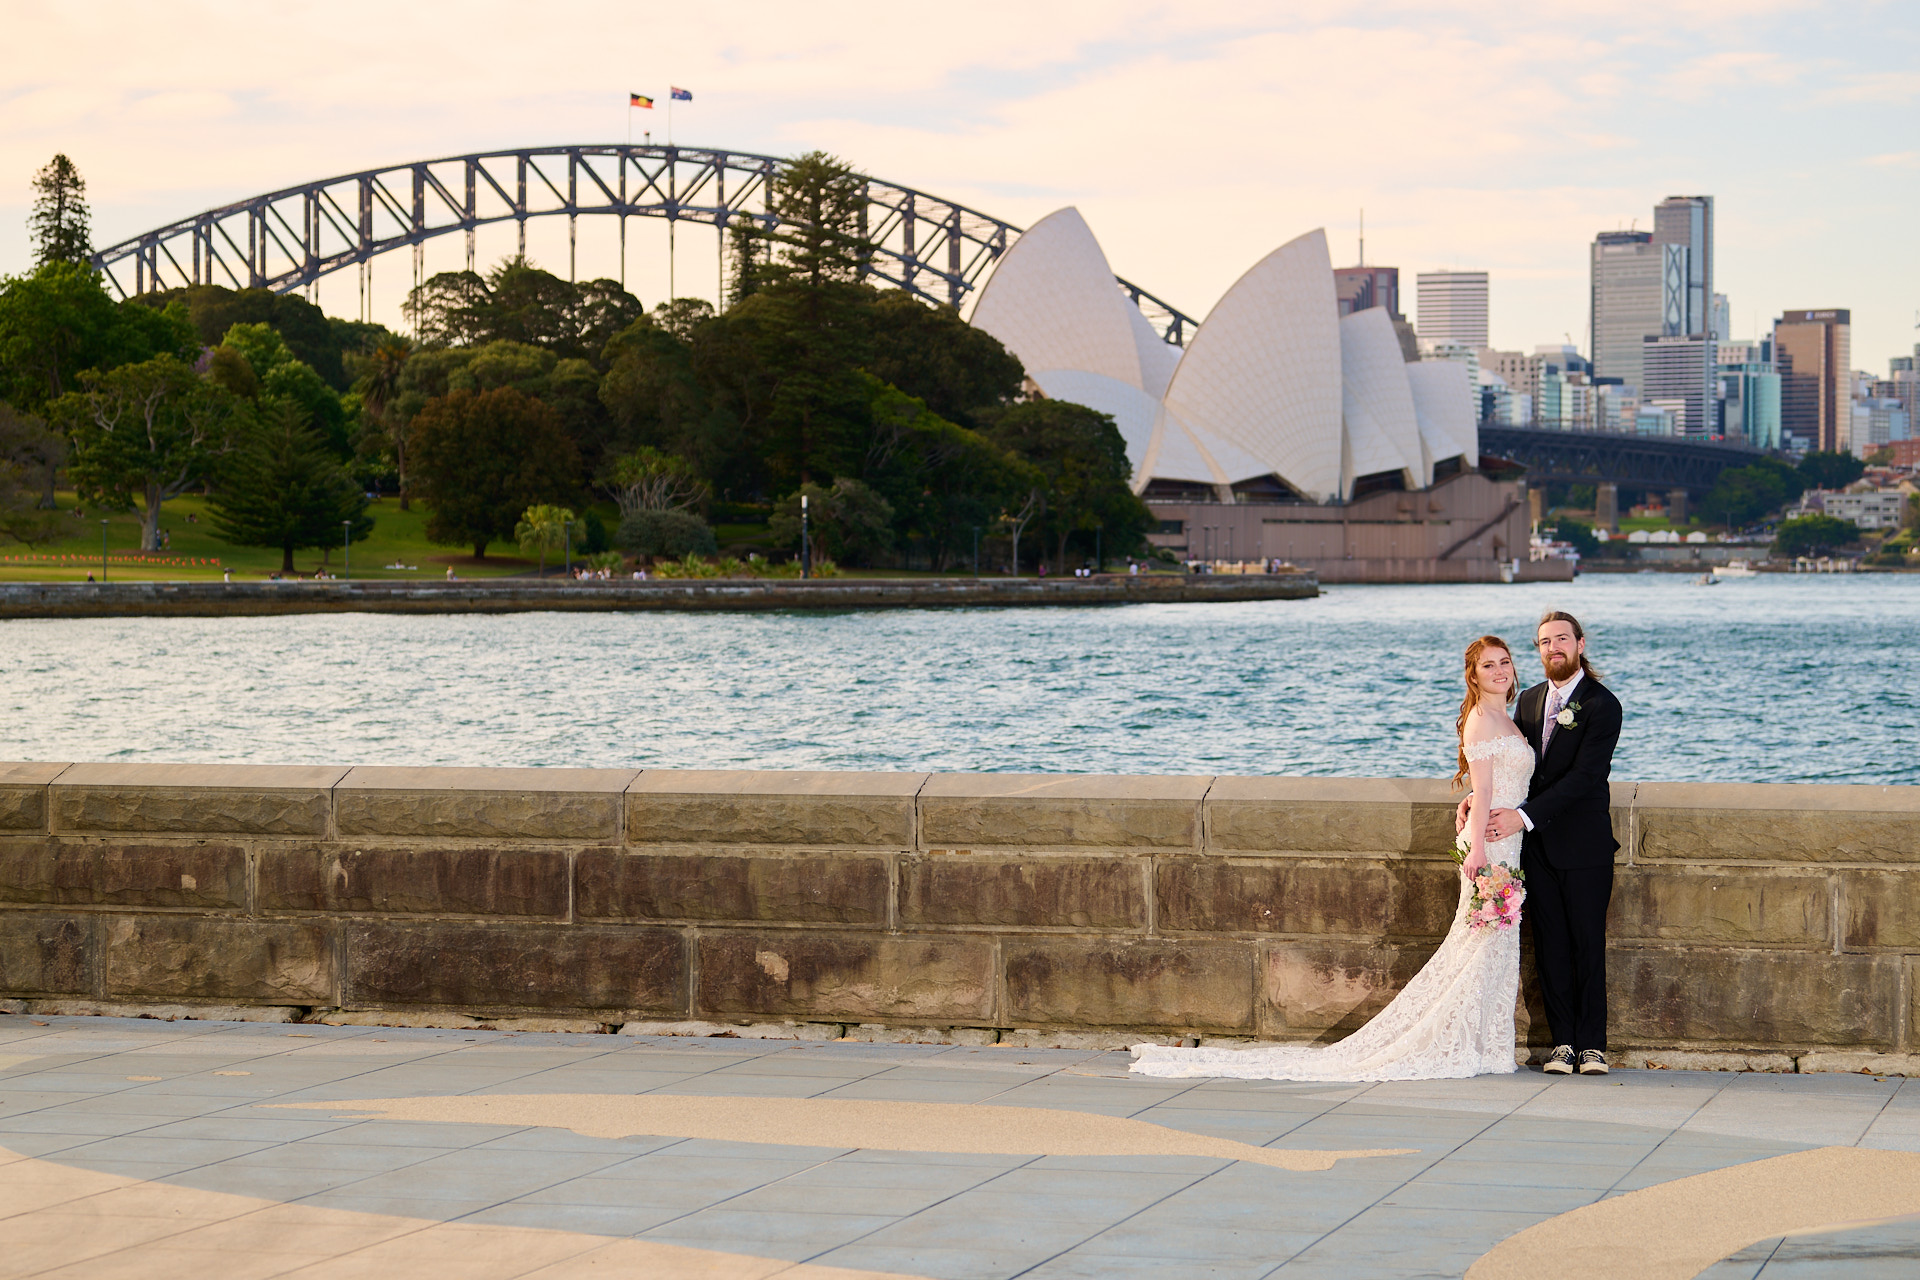 Sydney Harbour View Wedding photos at Royal Botanic Gardens, Sydney. By orlandosydney.com